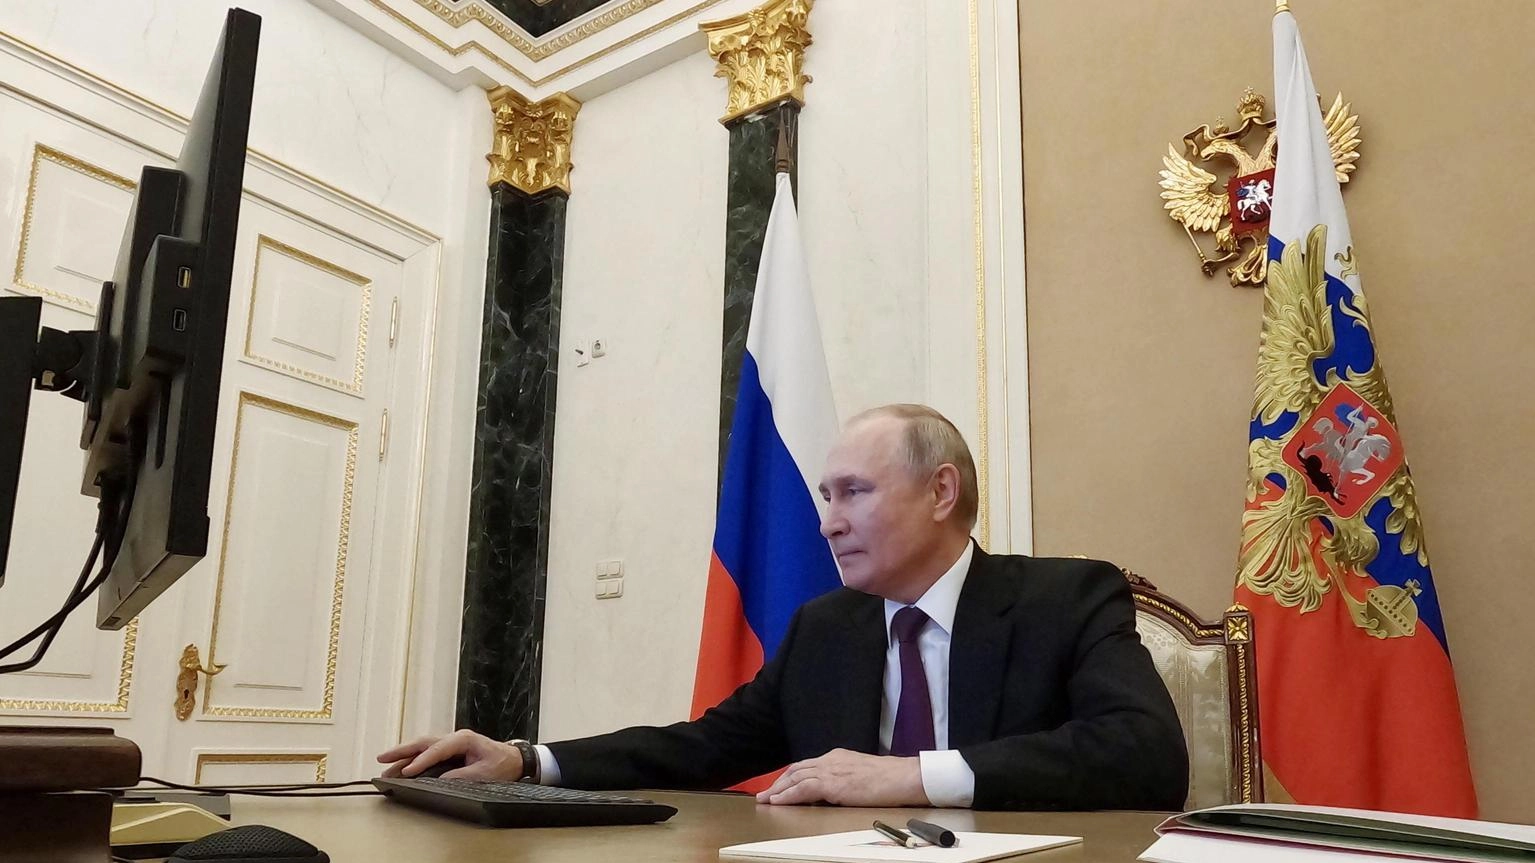 Vladimir Putin ha votato online per le presidenziali russe